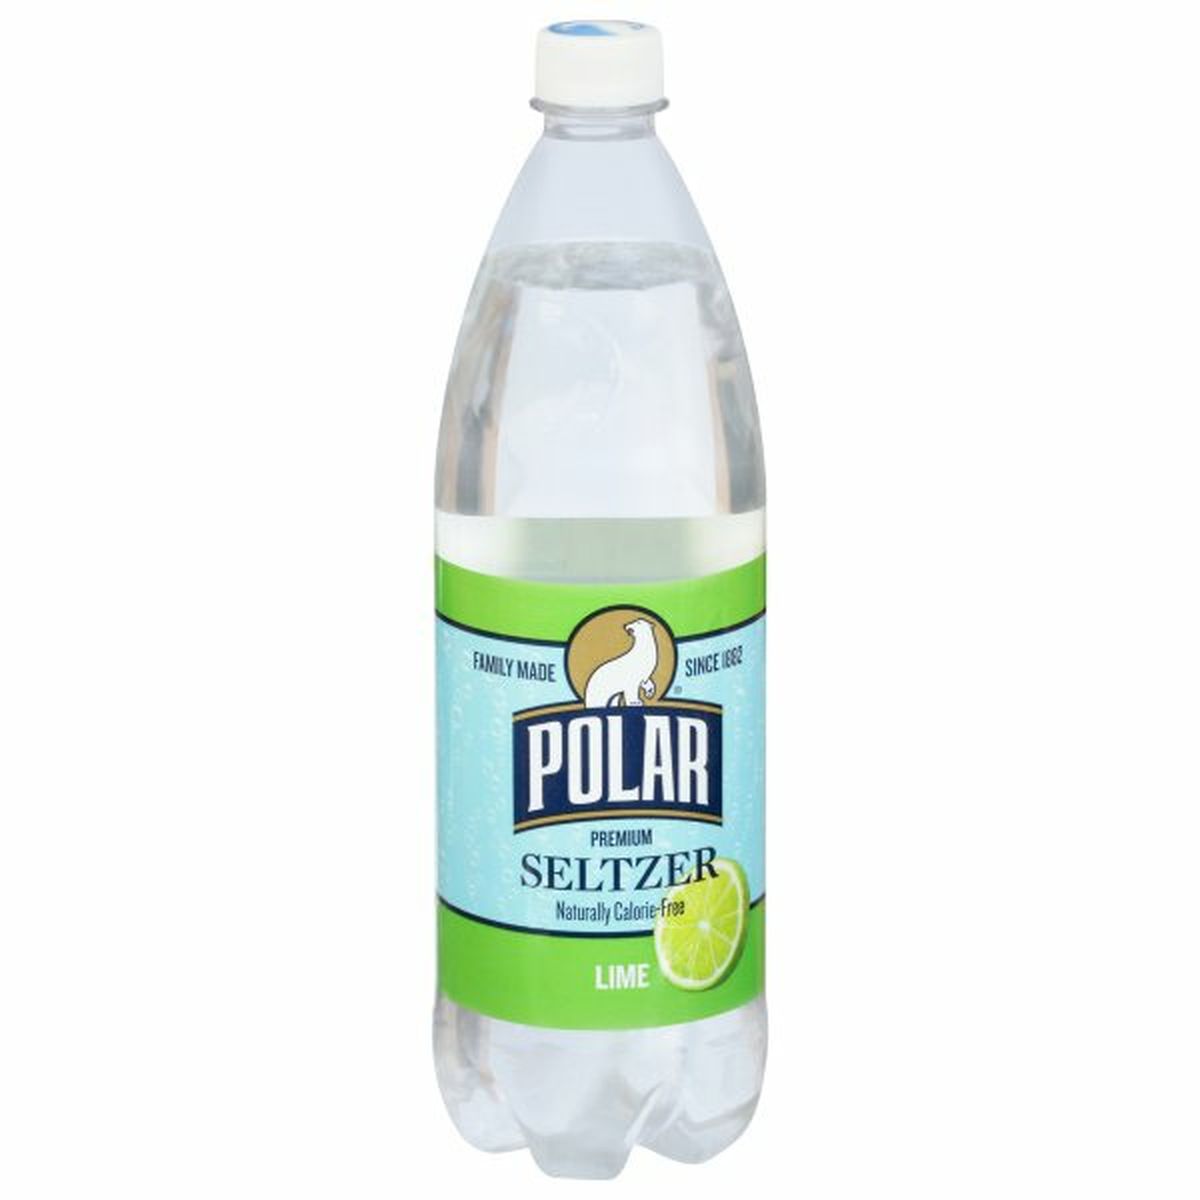 Calories in Polar Seltzer, Premium, Lime